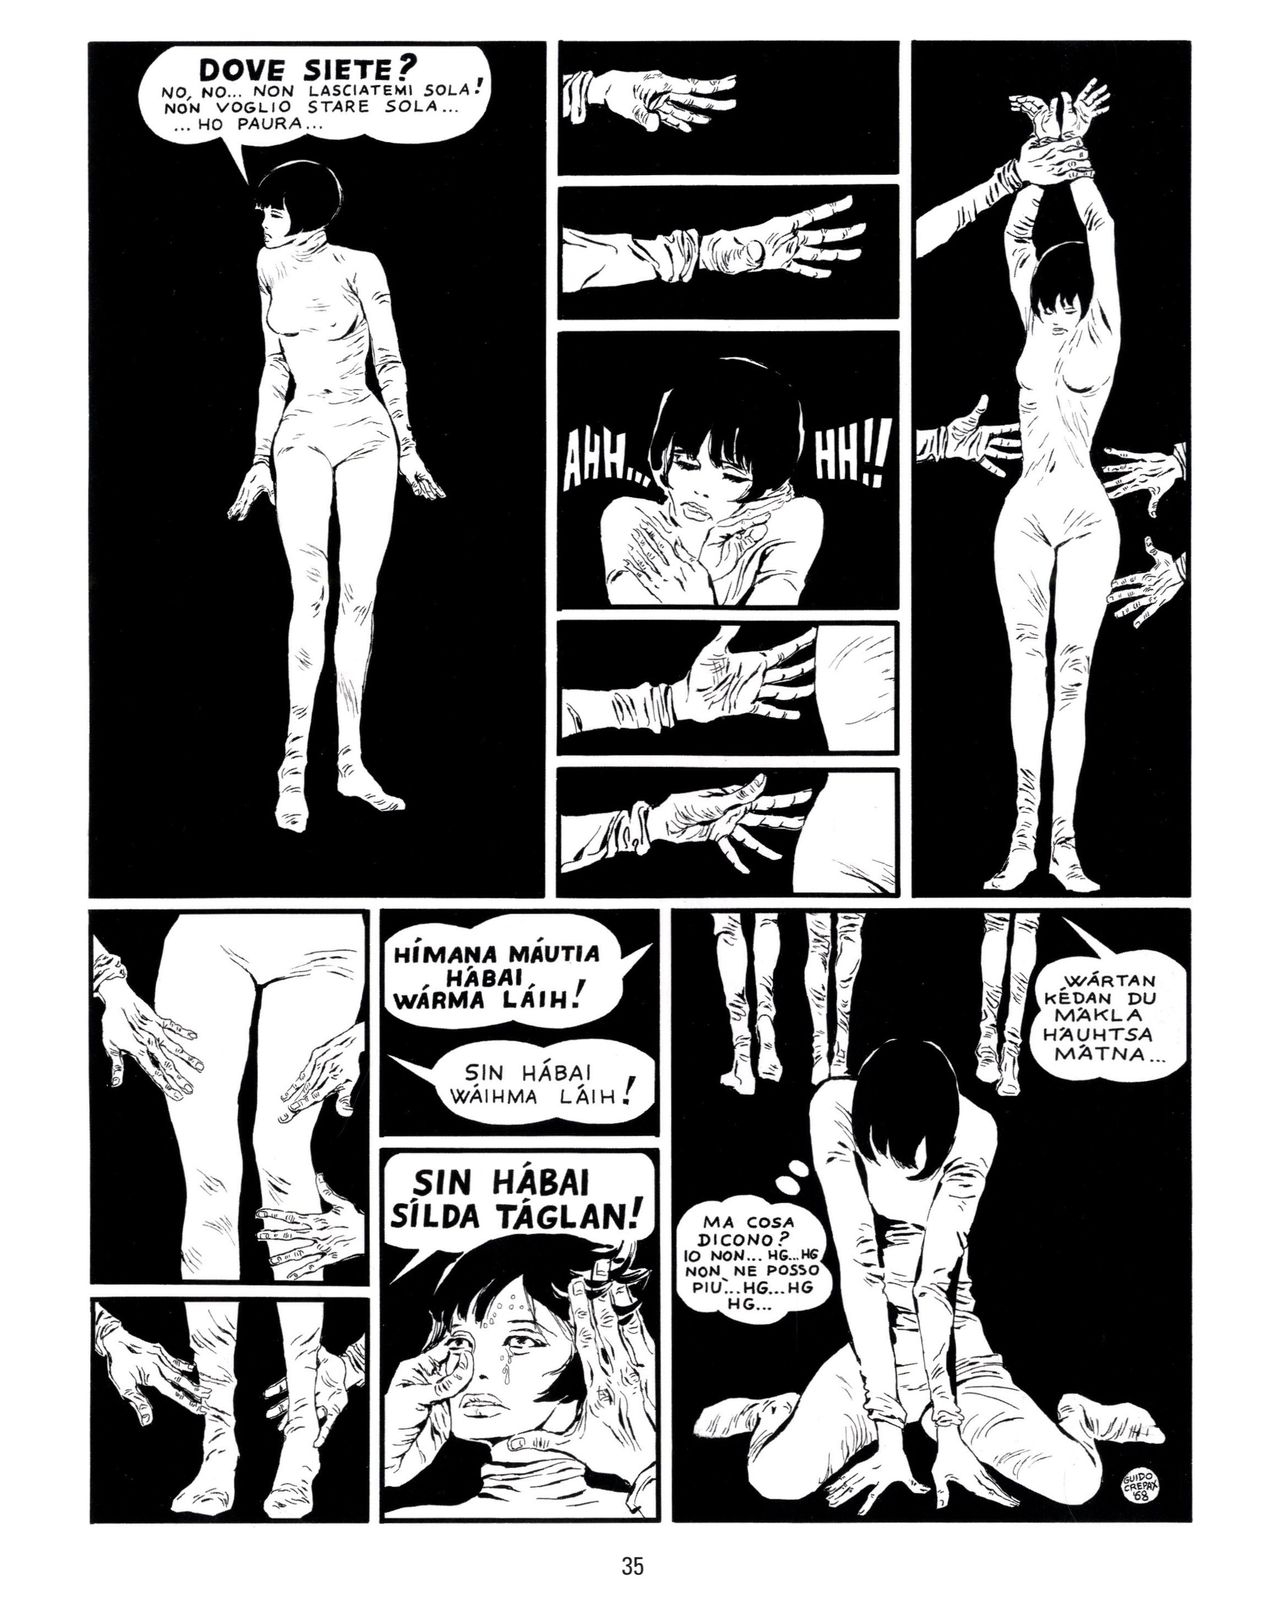 [Guido Crepax] Erotica Fumetti #25 : L'ascesa dei sotterranei : I cavalieri ciechi [Italian] 36